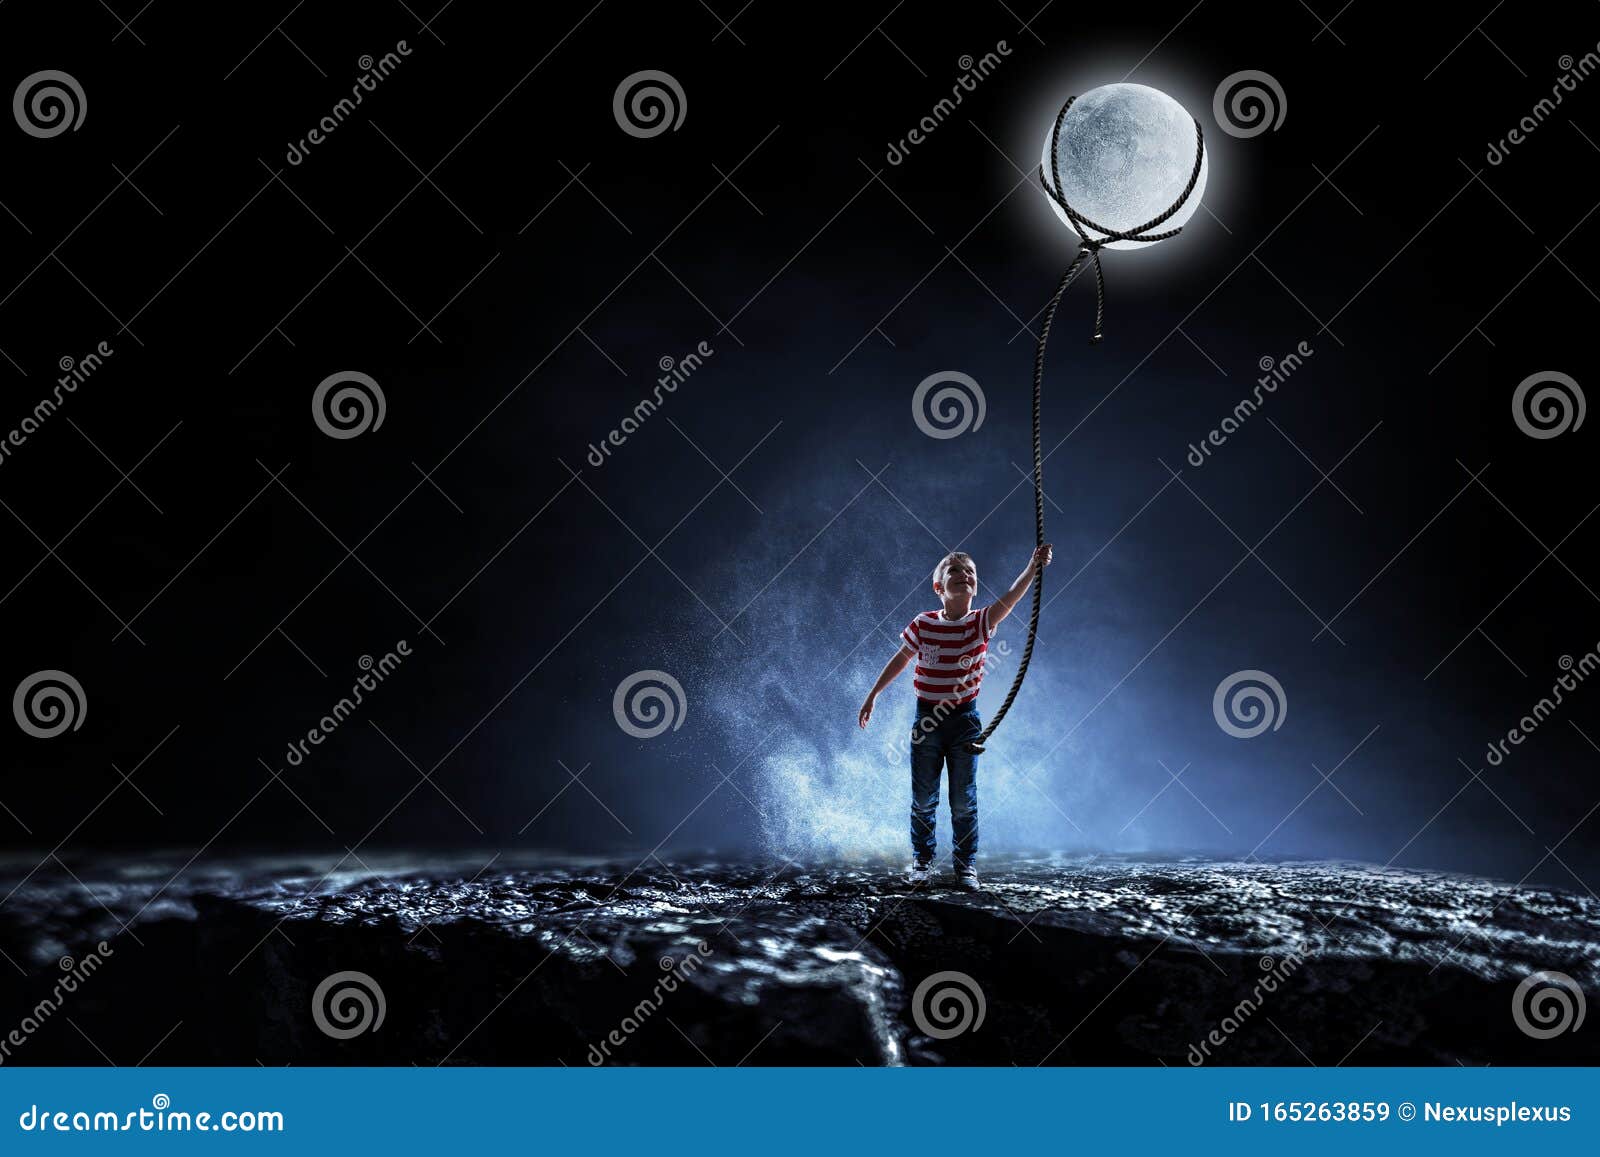 kid-boy-catching-moon-mixed-media-stock-image-image-of-bedtime